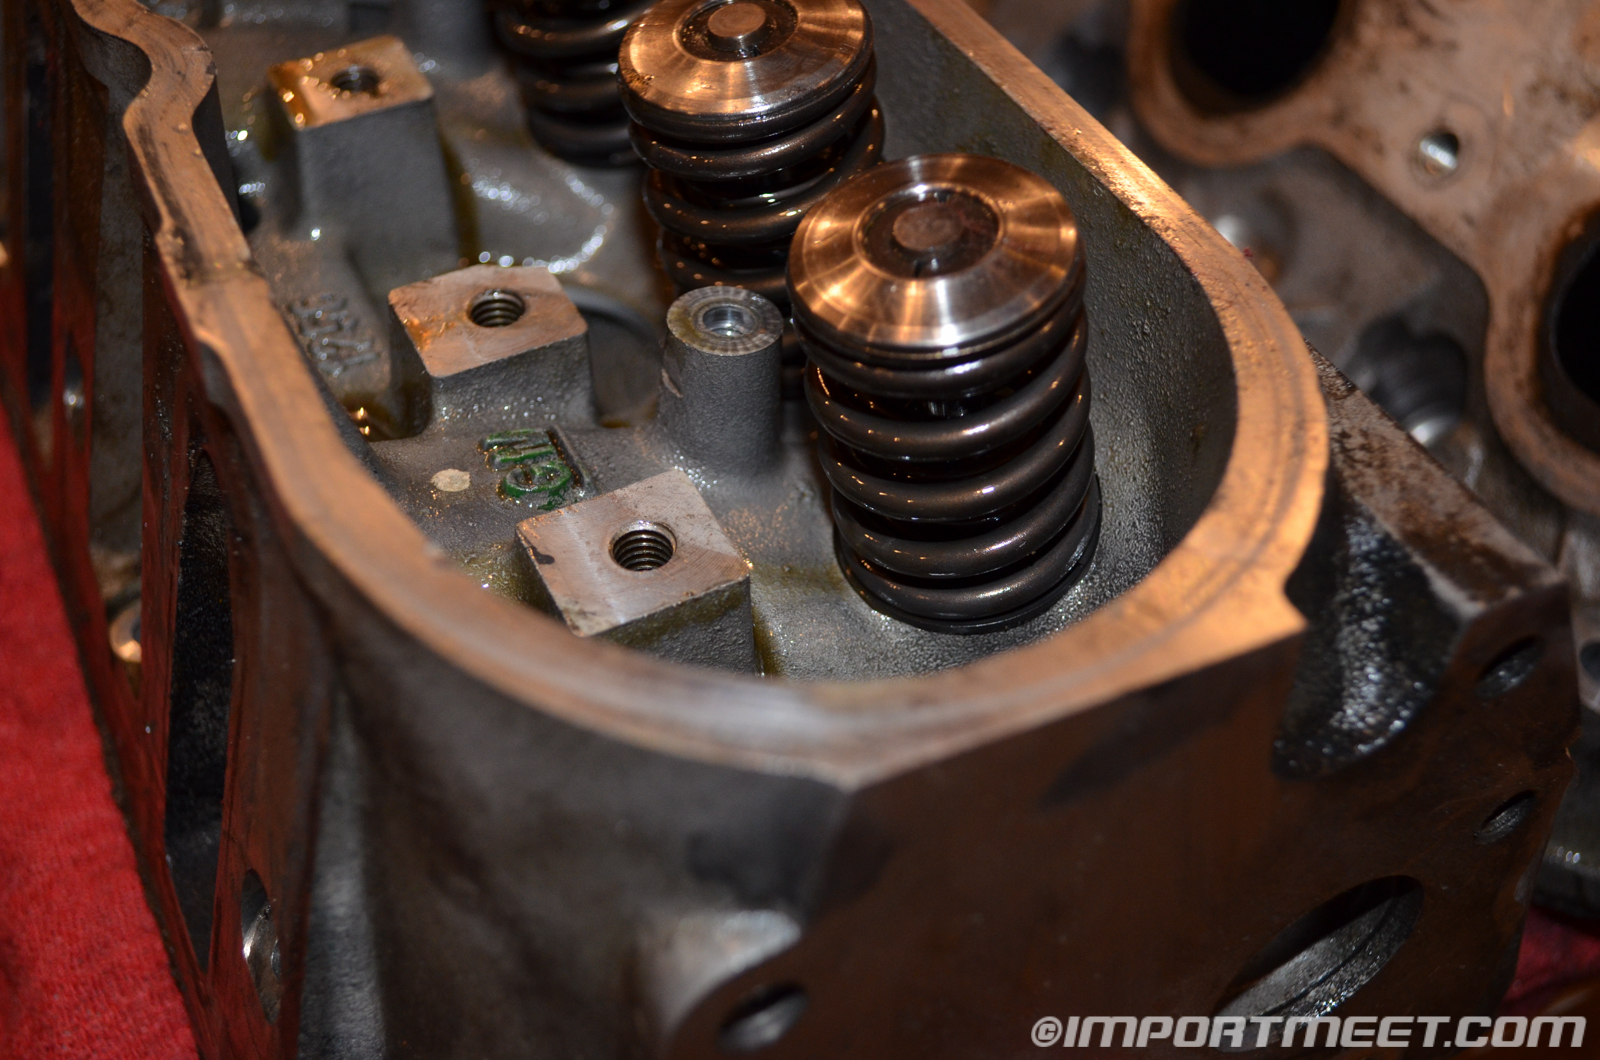 Project V8 RX-7 Update 6 - Parts Engine Teardown | Import Meet